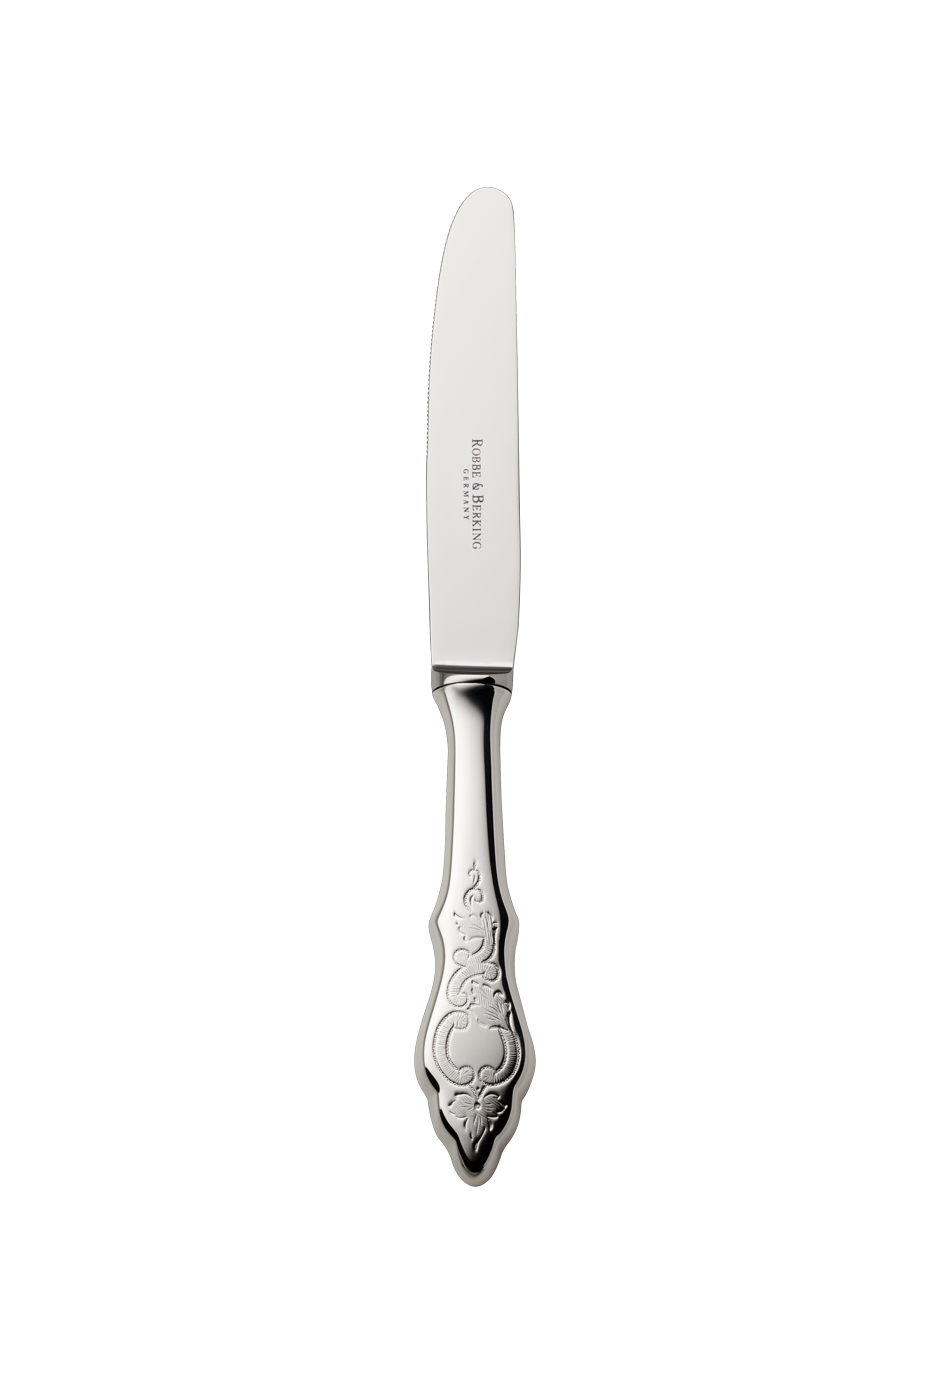 Ostfriesen Menu Knife (18/8 stainless steel)